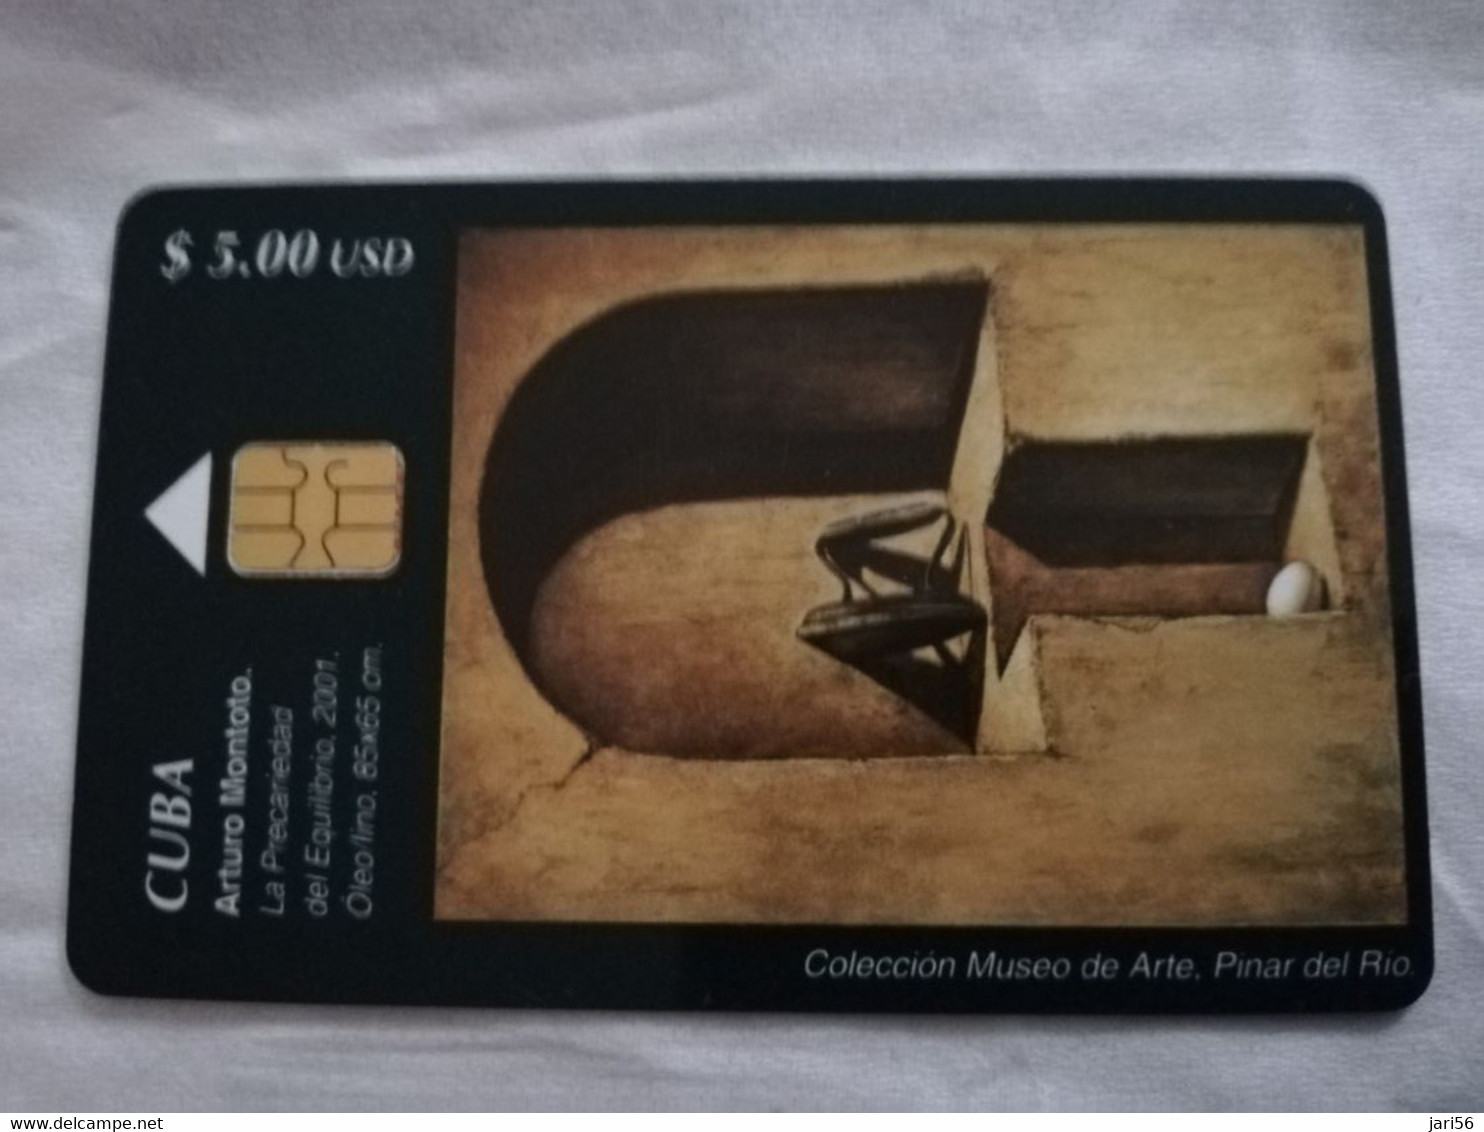 CUBA $5,00   CHIPCARD   ARTURO MONTOTO        Fine Used Card  ** 6818** - Kuba